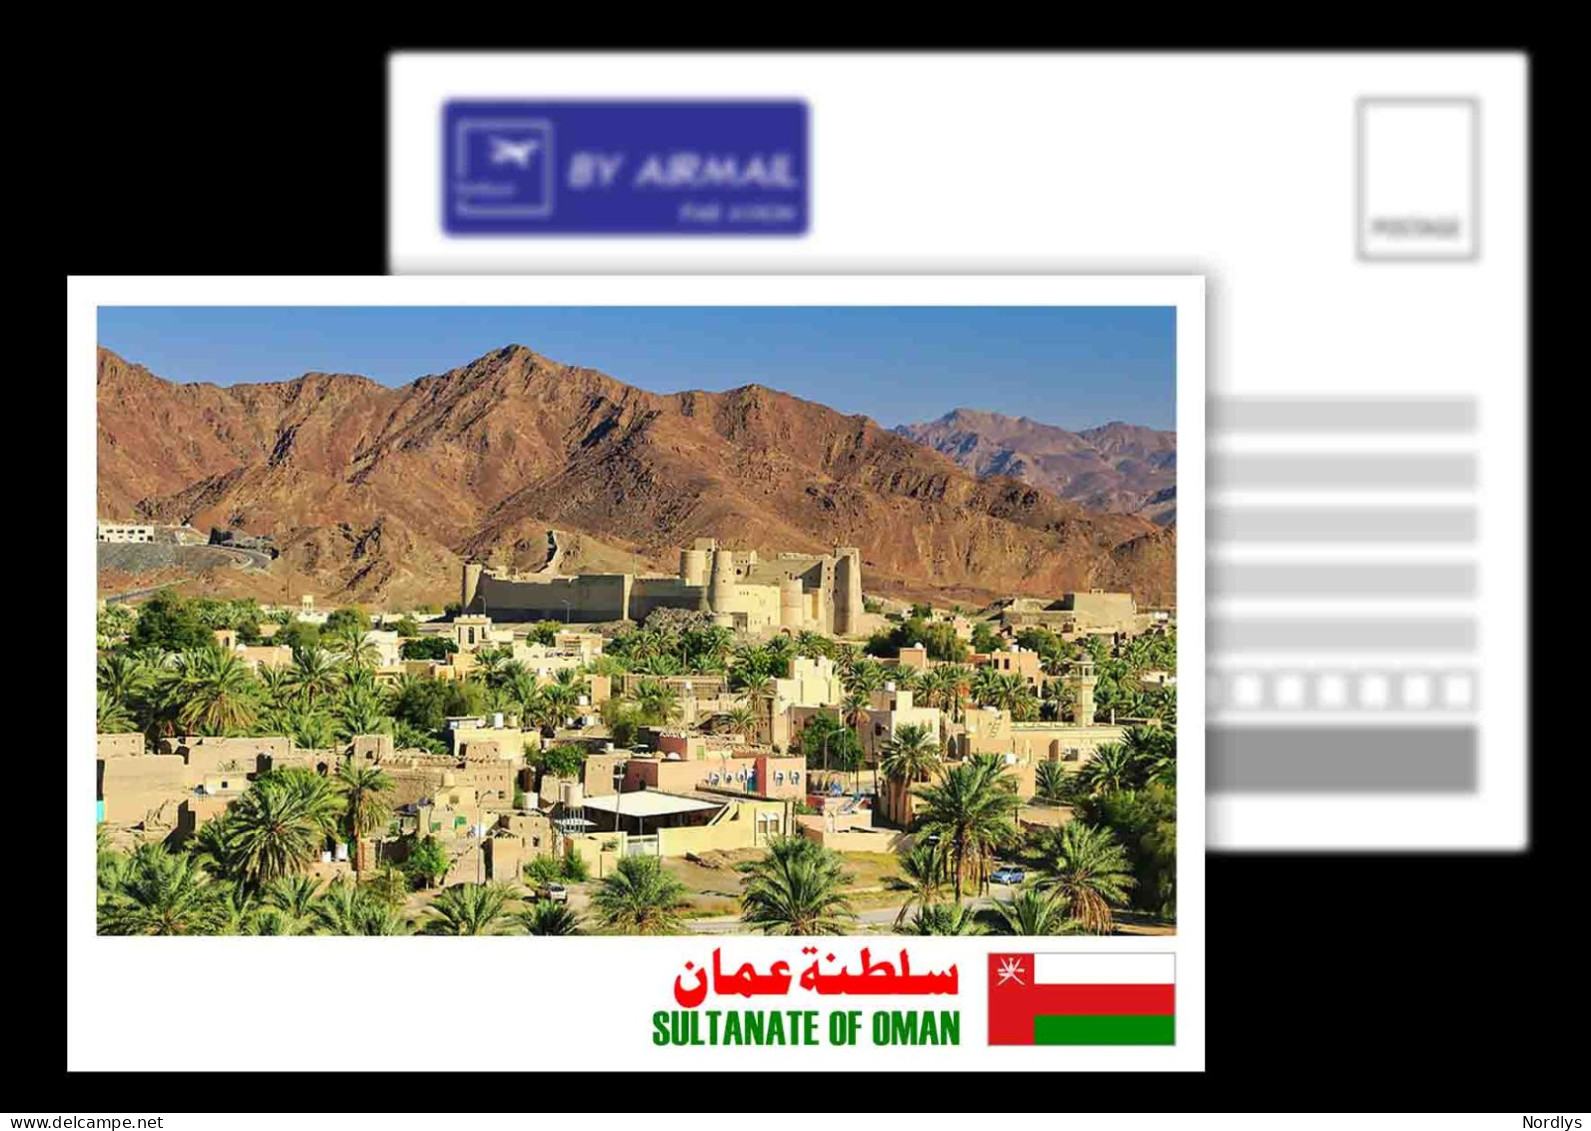 Oman / Bahla Fort / Postcard / View Card - Oman